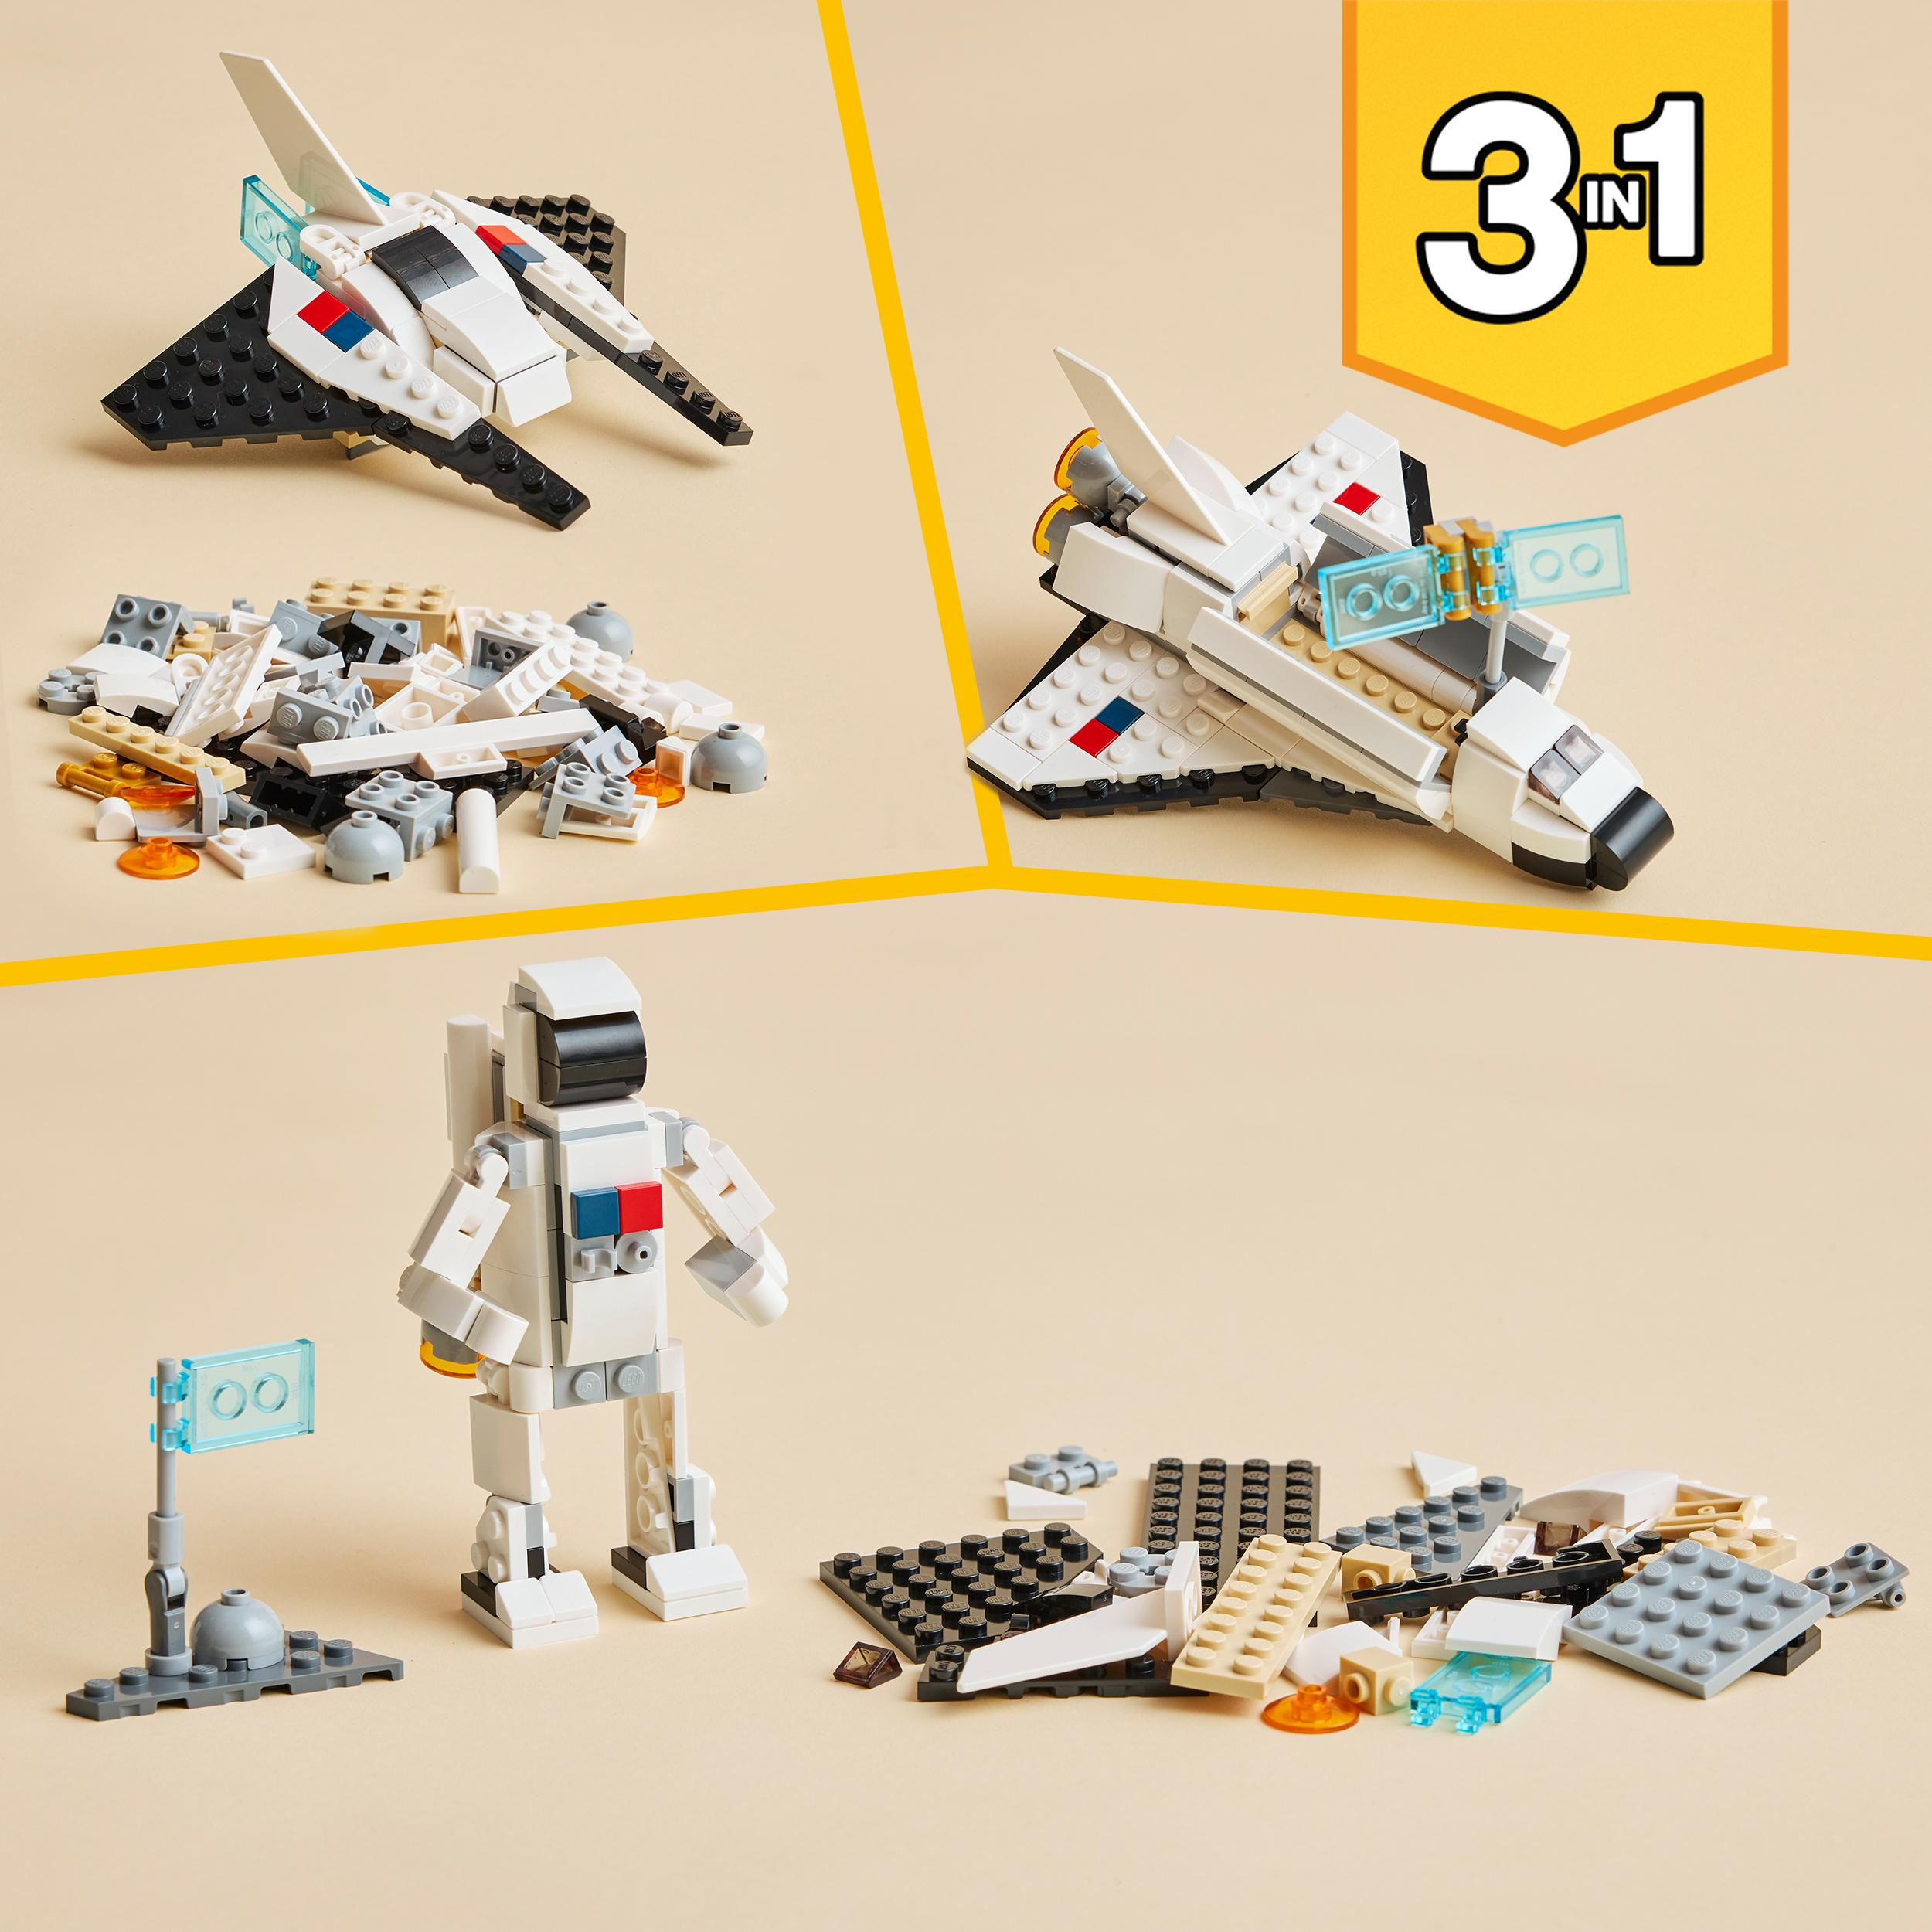 LEGO Creator 31134 Spaceshuttle Mehrfarbig Bausatz